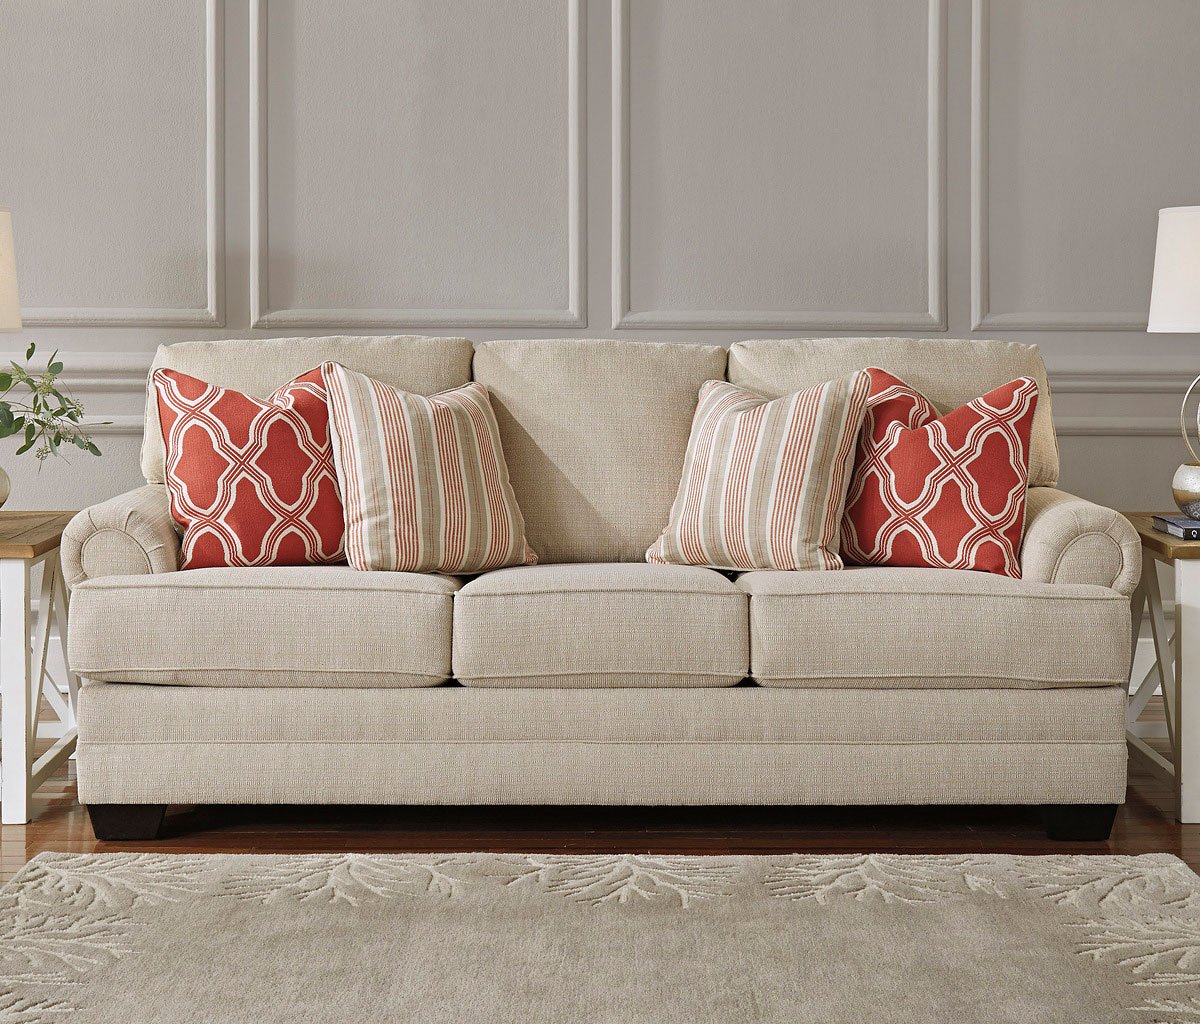 Sansimeon Stone Sofa - Sofas - Living Room Furniture - Living Room